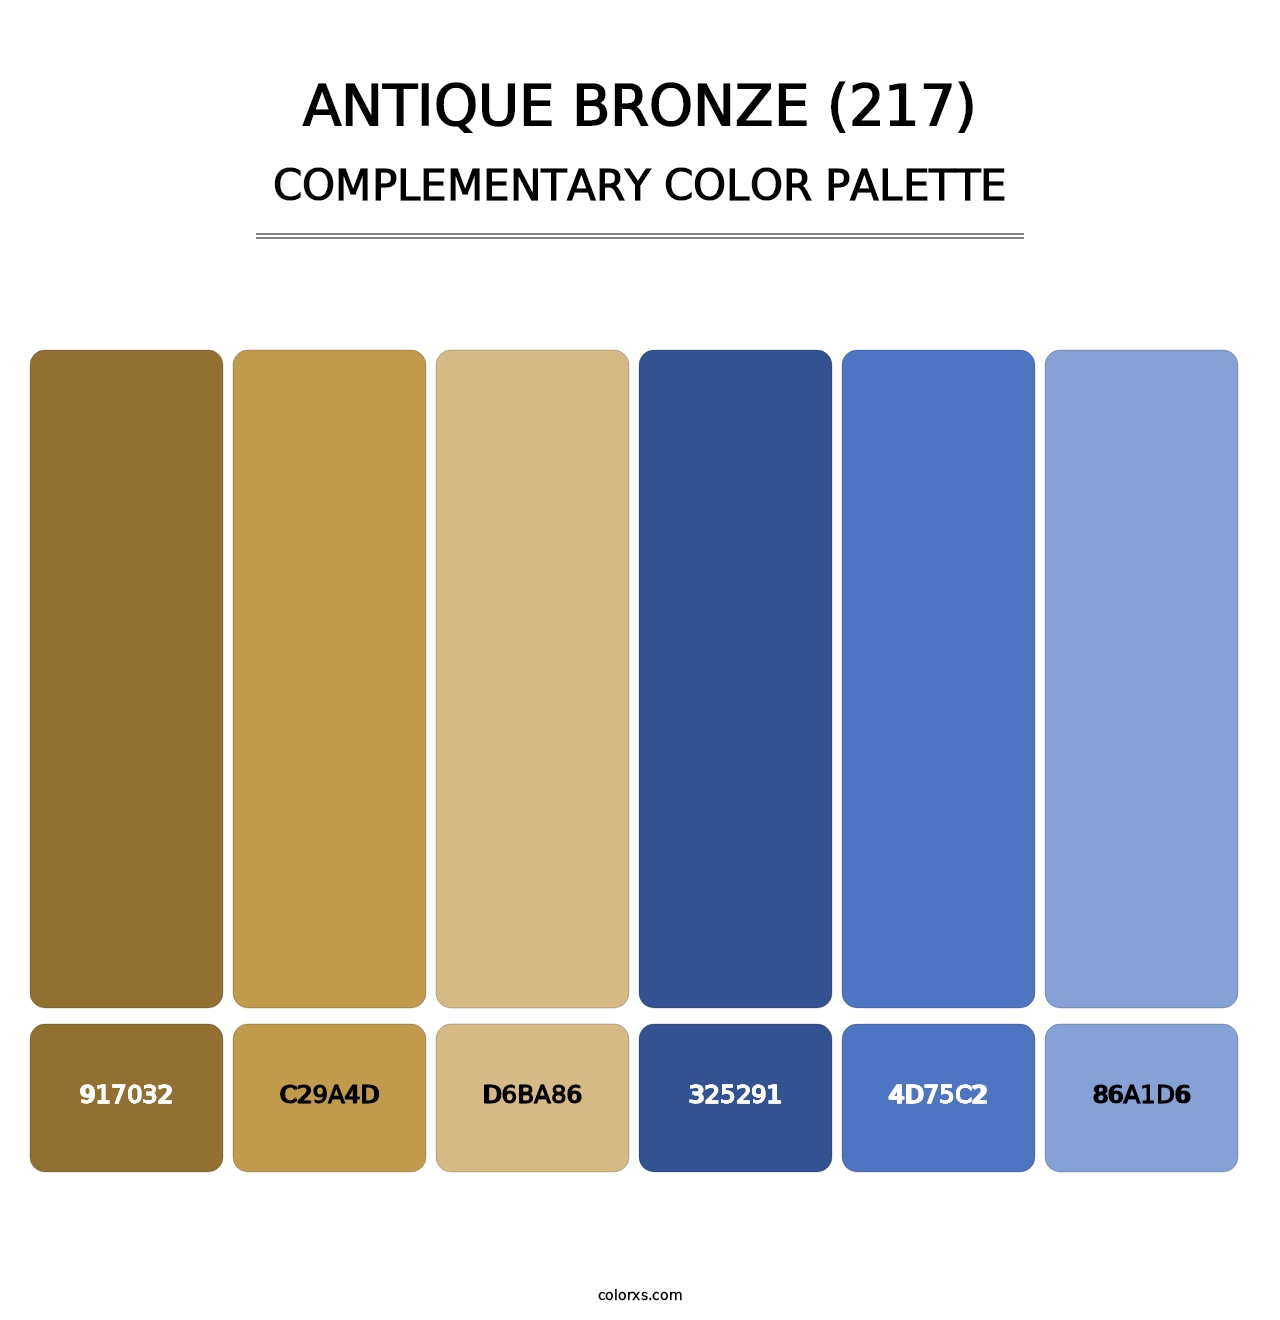 Antique Bronze (217) - Complementary Color Palette